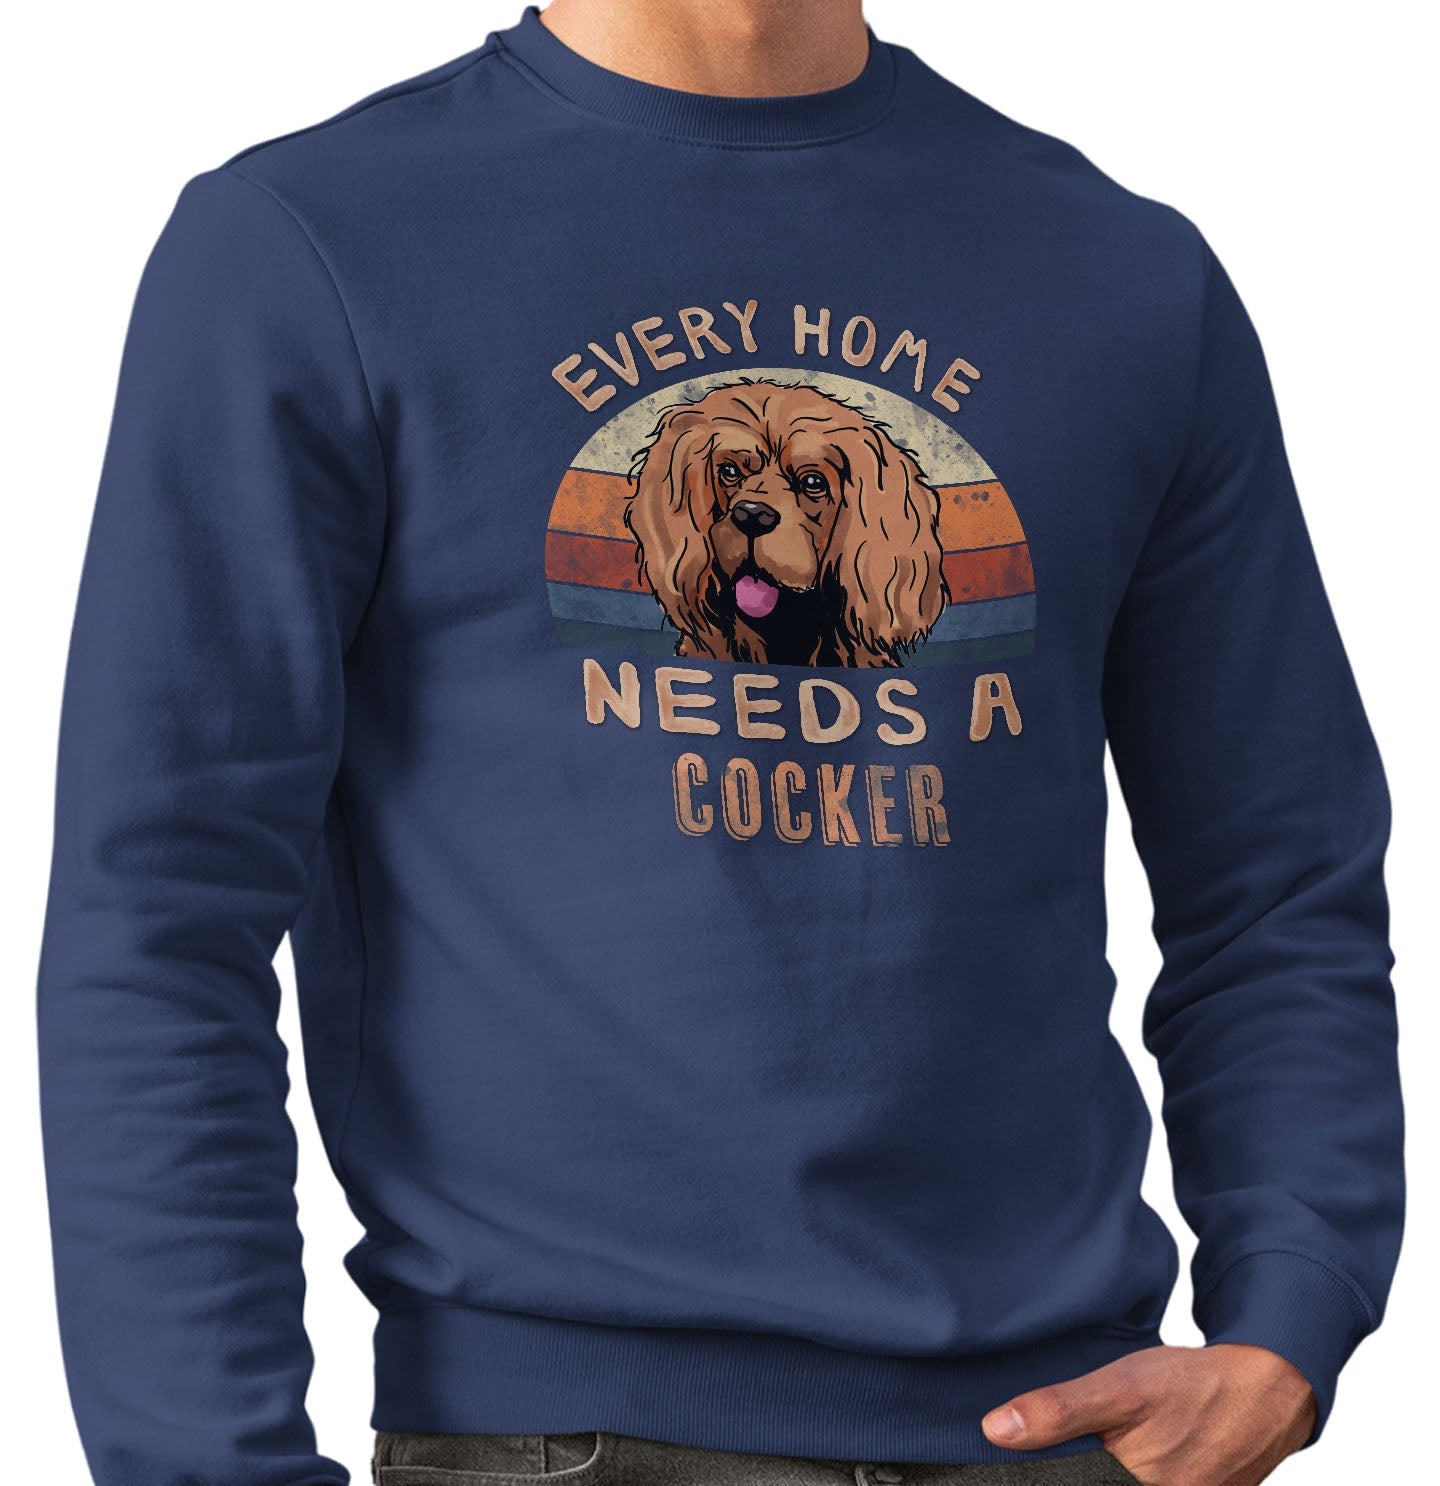 Every Home Needs a Cocker Spaniel - Adult Unisex Crewneck Sweatshirt